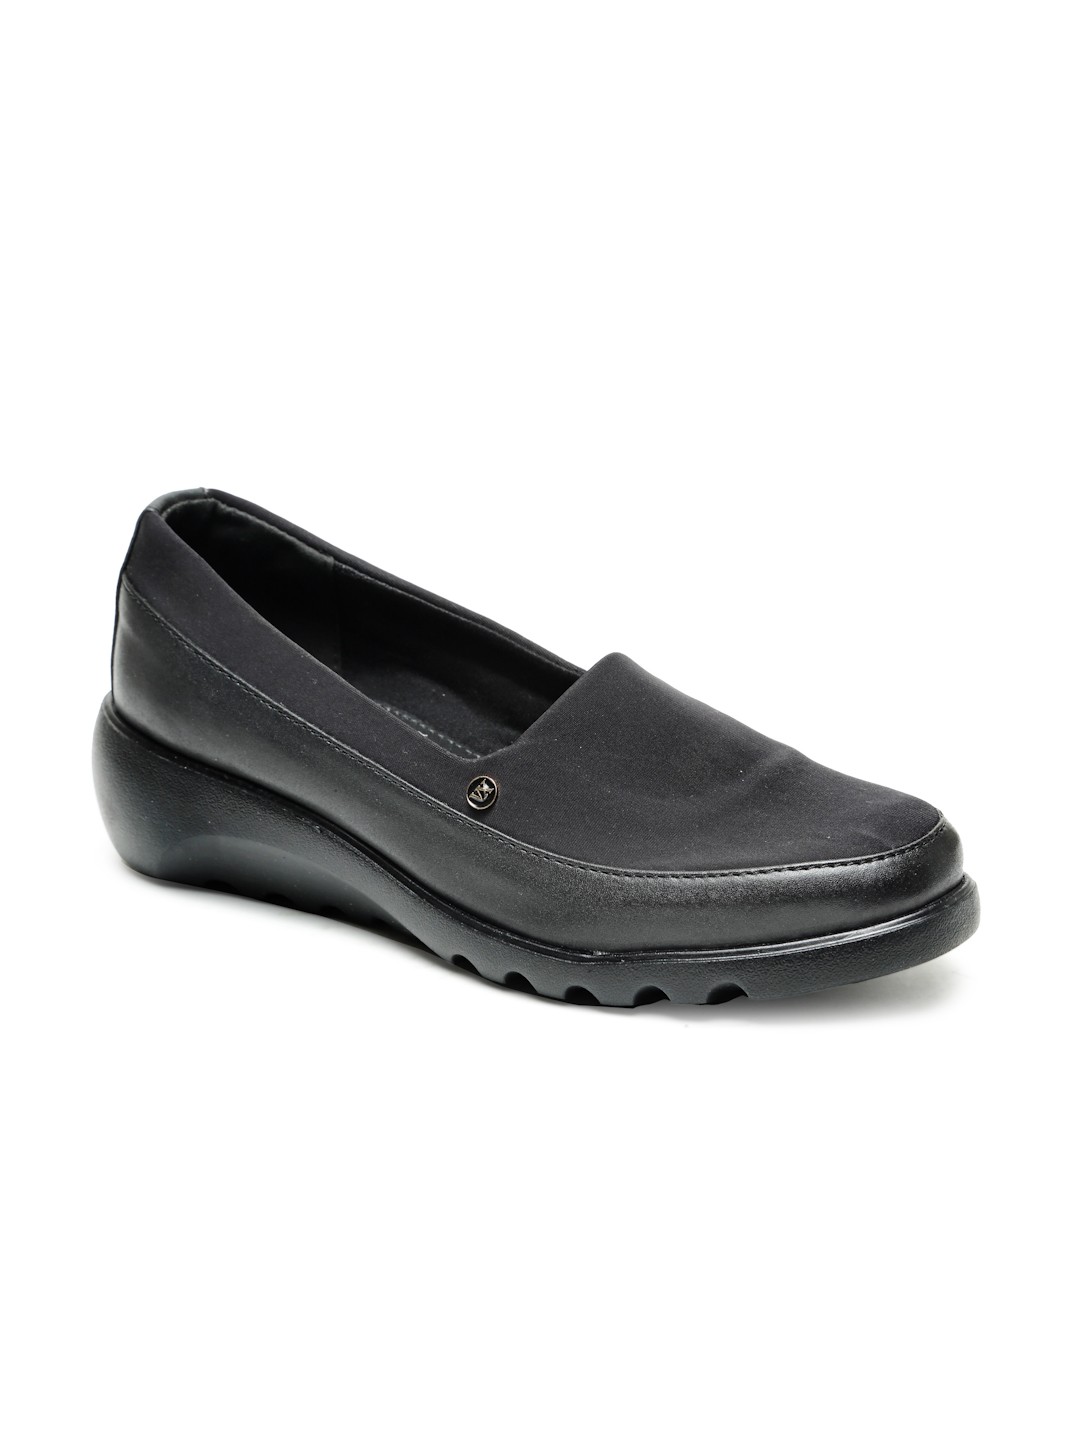 VON WELLX GERMANY comfort women's Black casual shoes ELSA